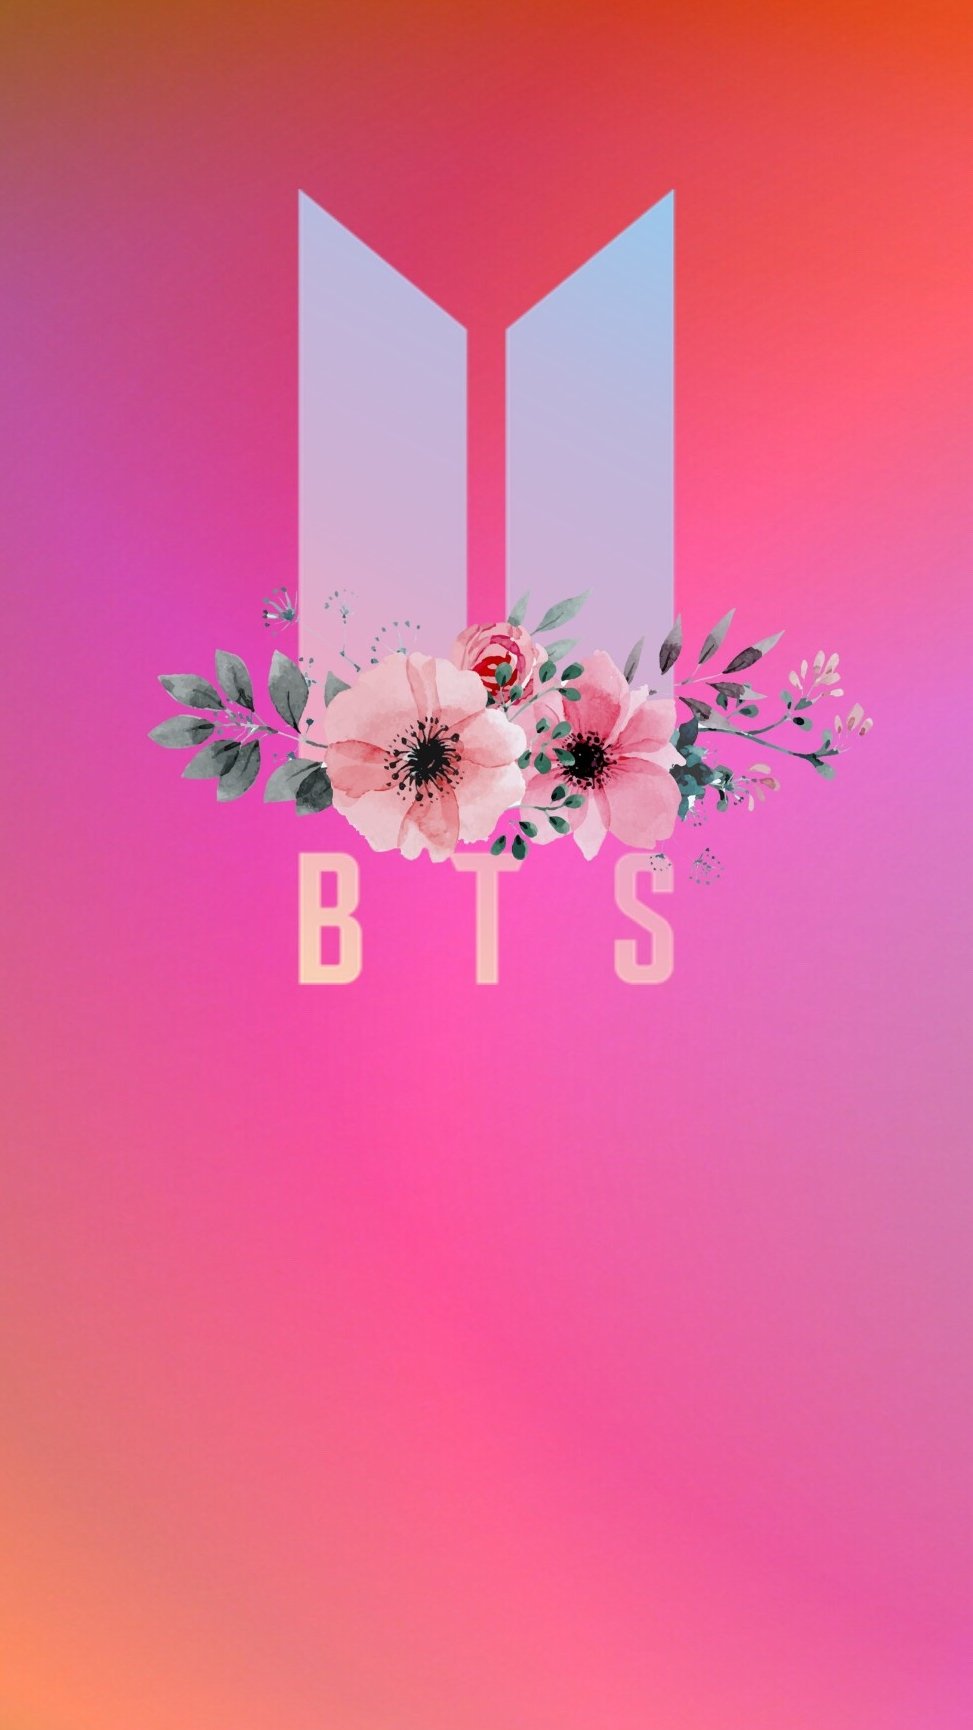 BTS Phone Wallpaper - Aw thanks!